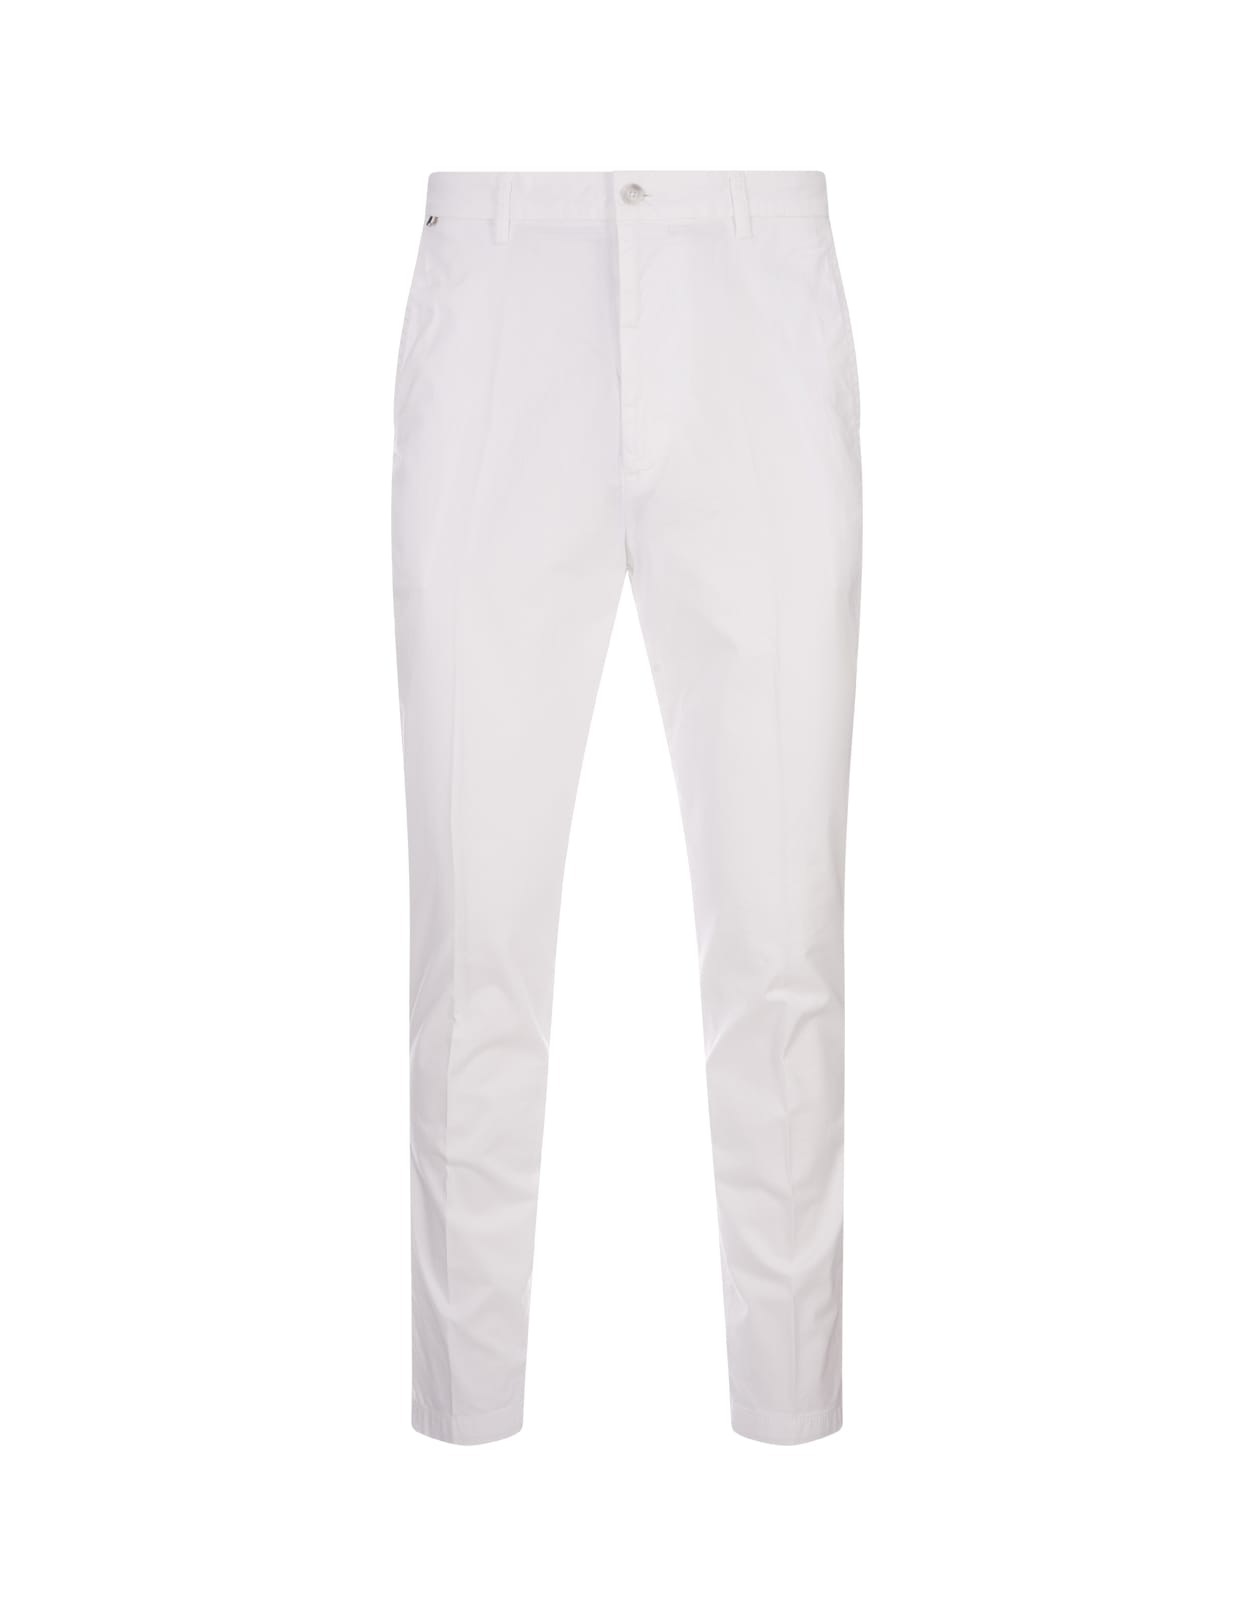 Hugo Boss Slim Fit Chino Trousers In White Stretch Gabardine